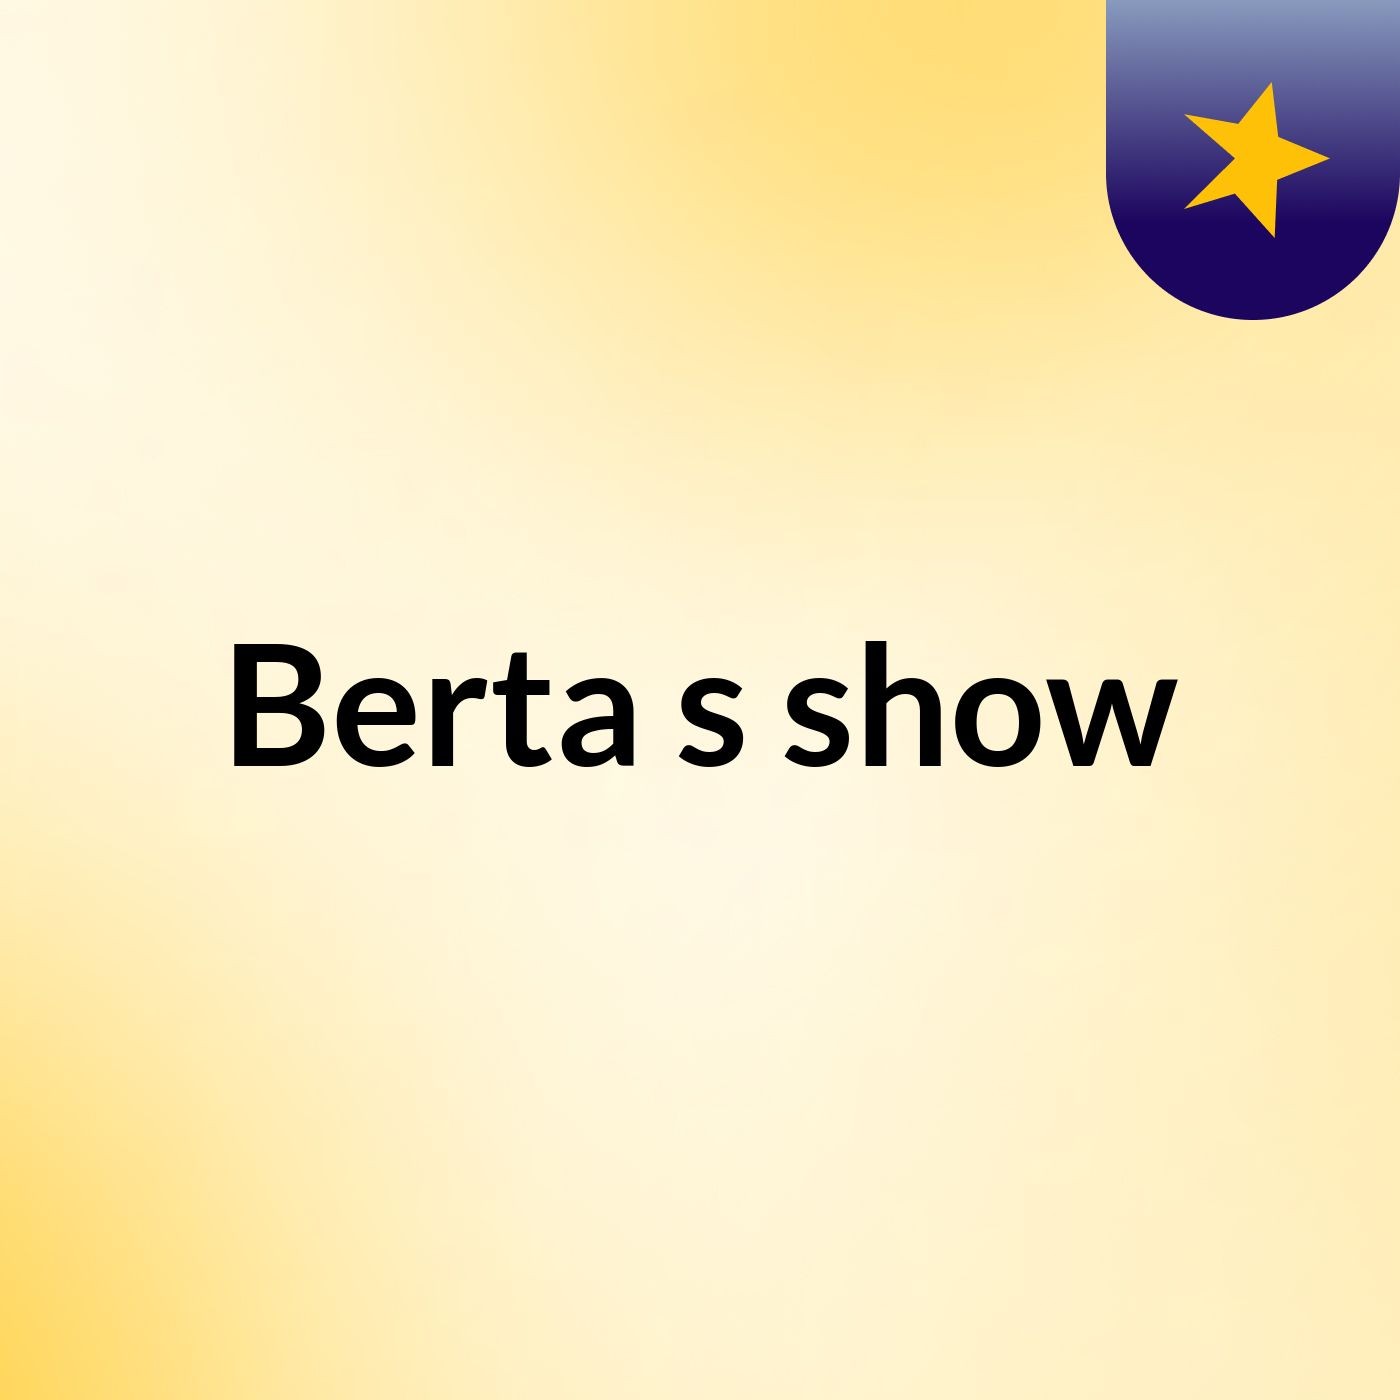 Berta's show